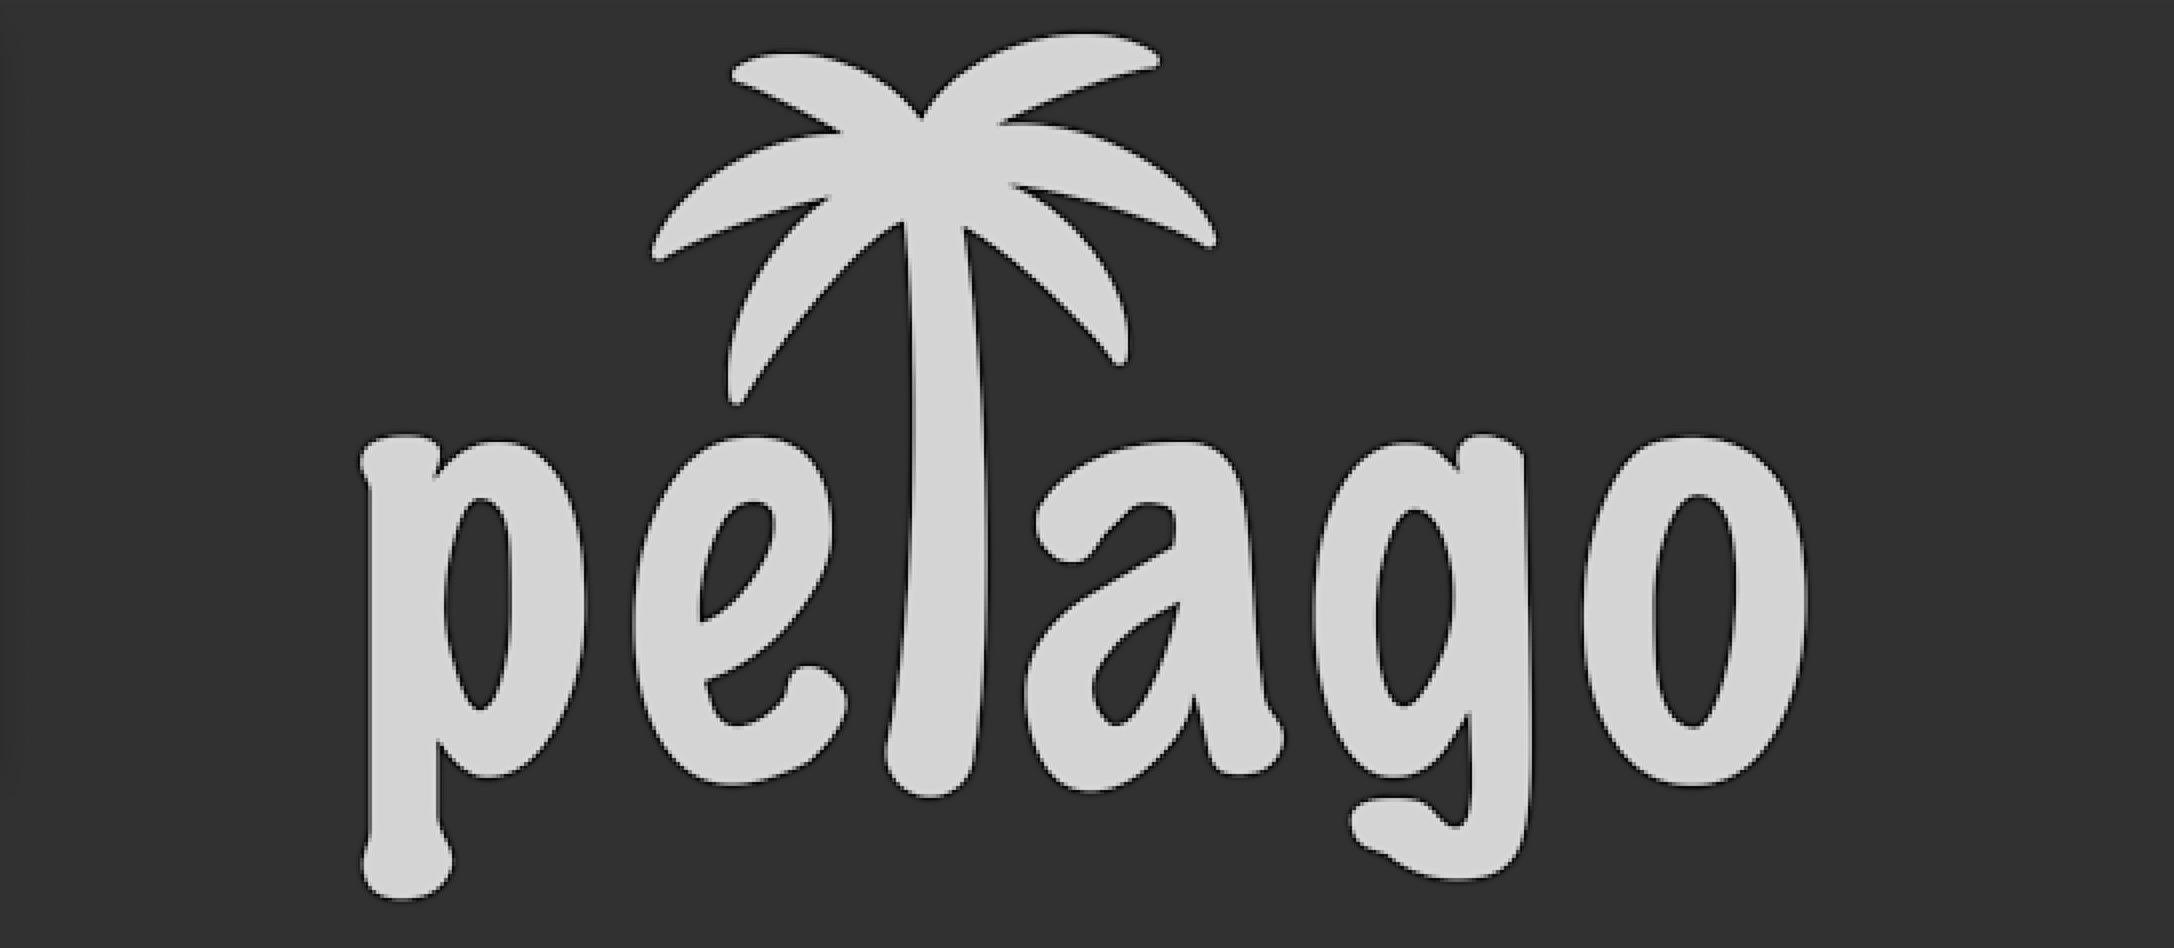 Trademark Logo PELAGO